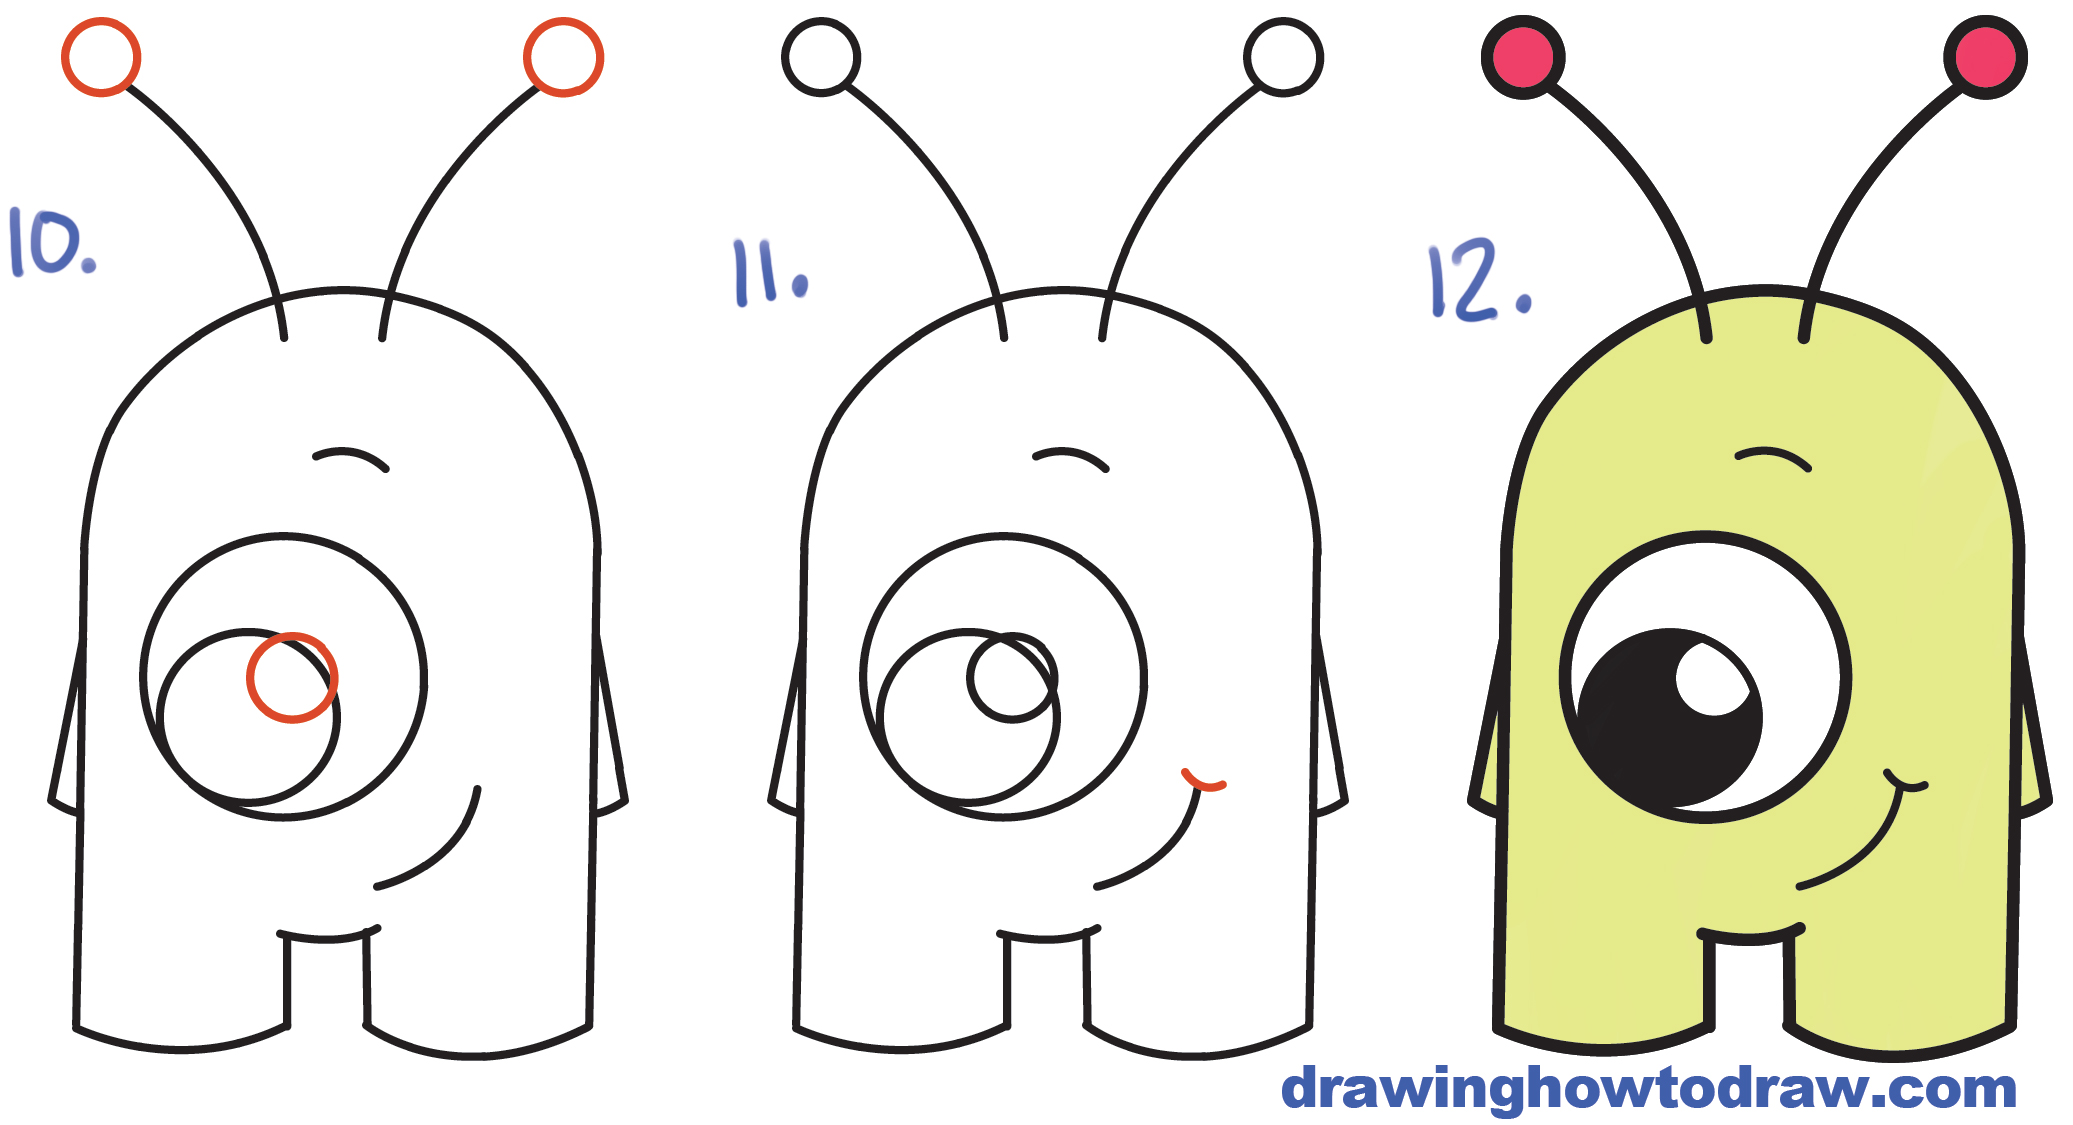 Easy Drawing Step By Step Cartoon - How to Draw Cute Chibi / Kawaii